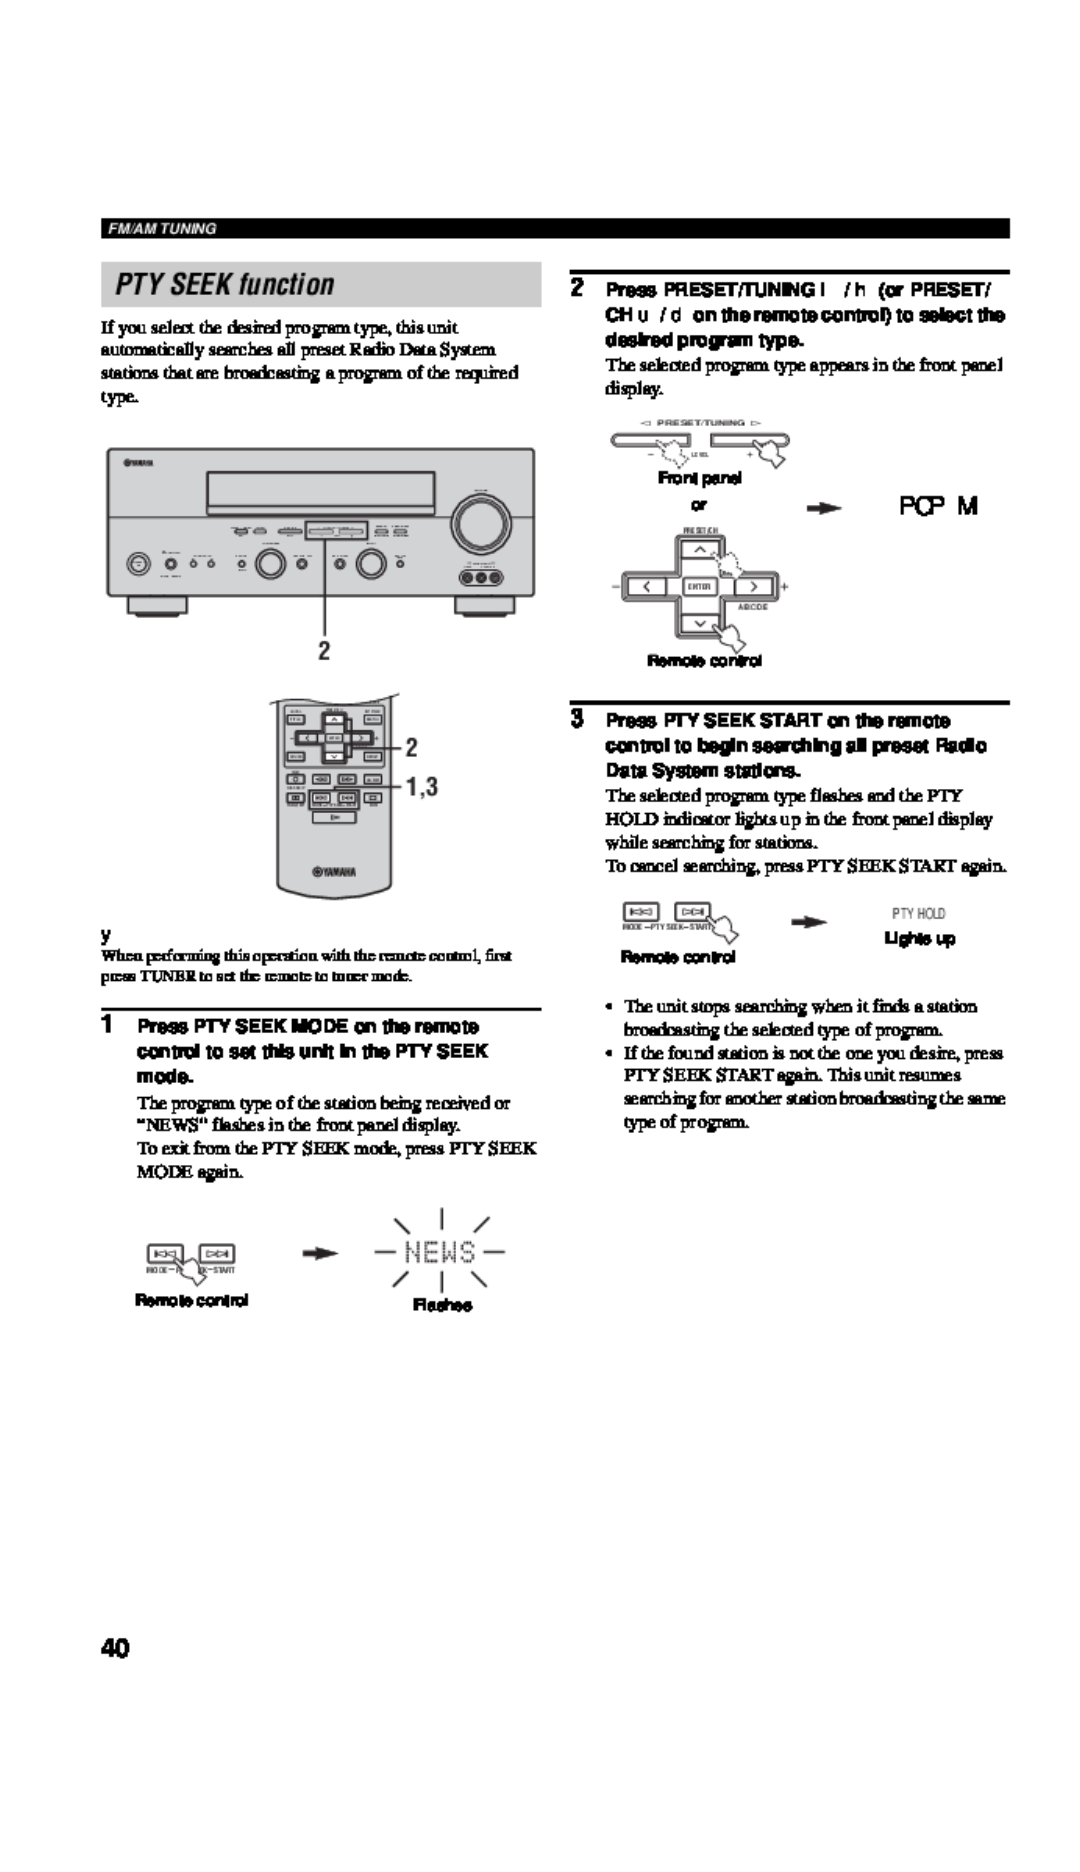 Yamaha RX-V557 owner manual PTY SEEK function, 2 2 1,3, Pop M 